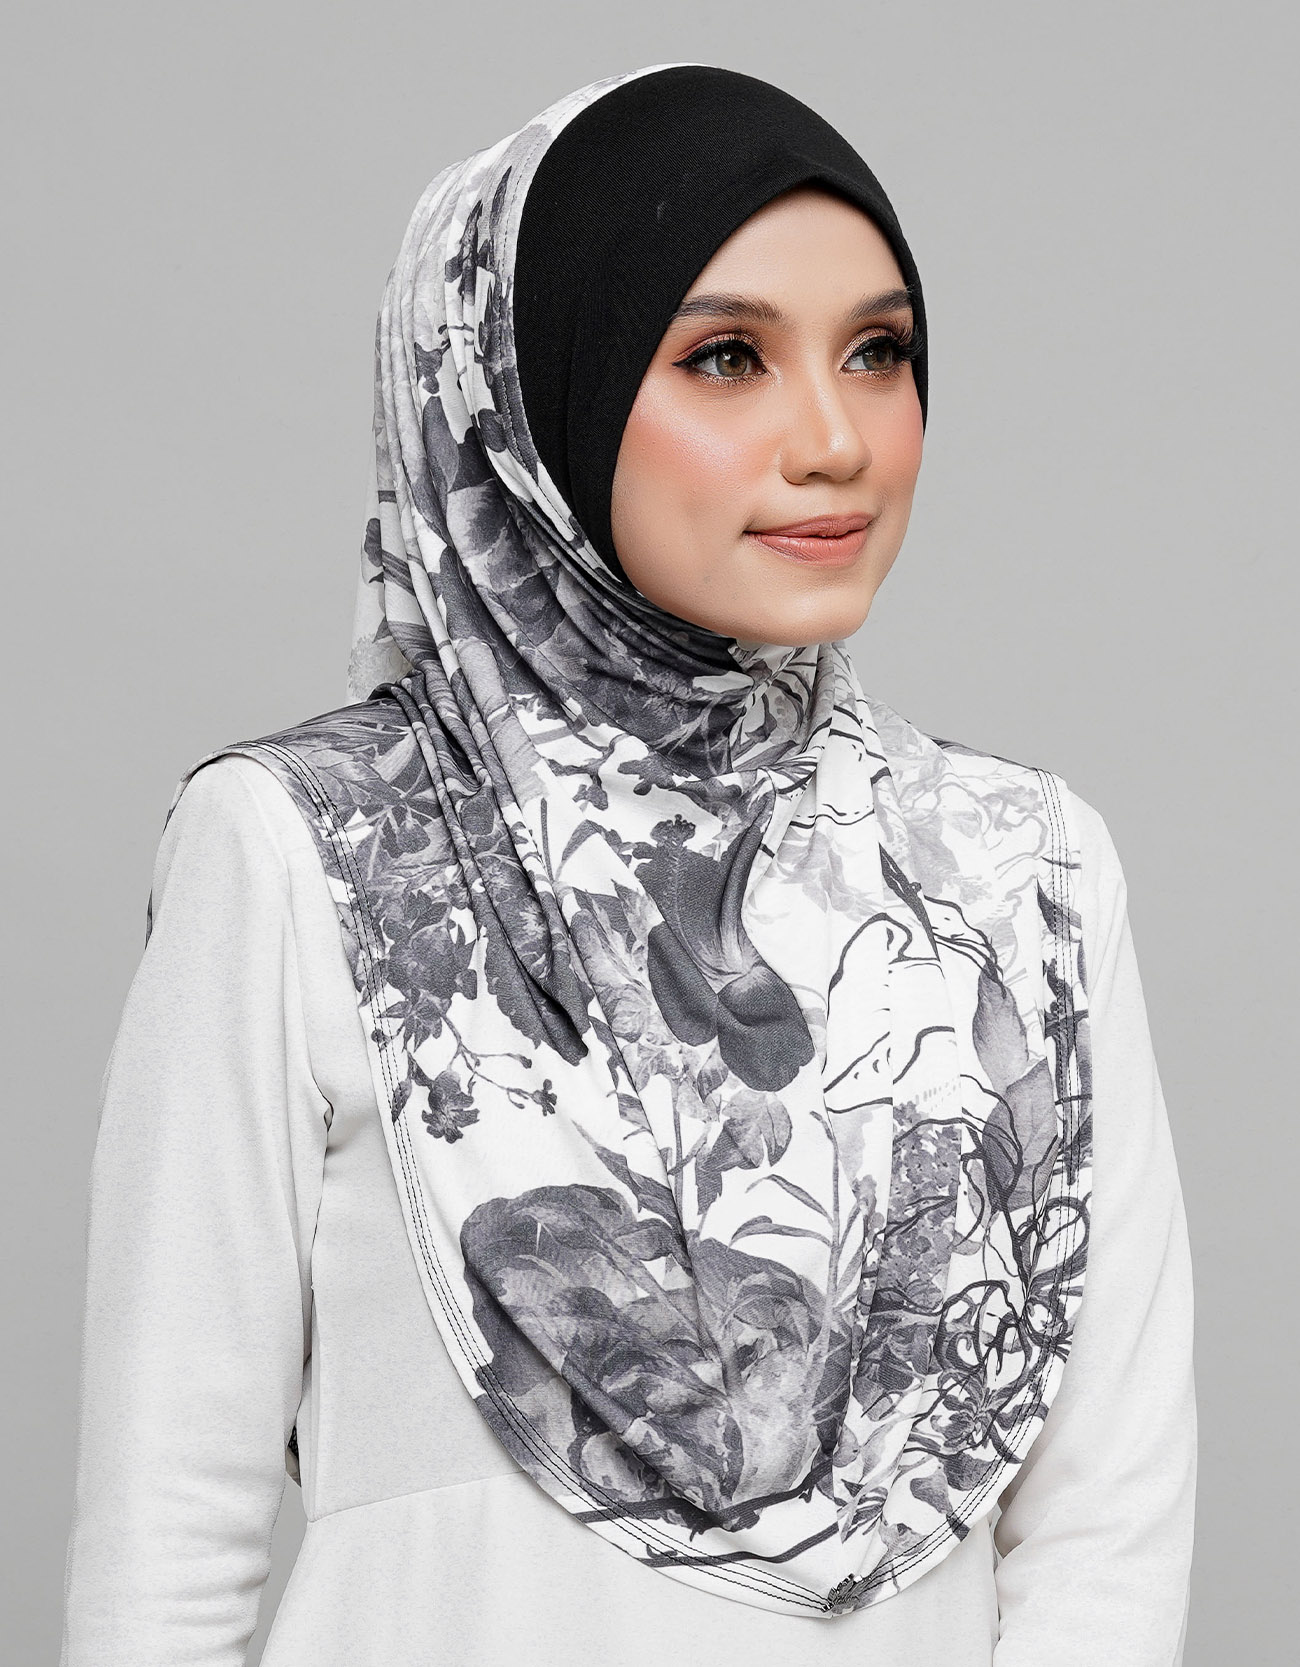 Express Hijab Damia Signature 05 - Black Edition&w=300&zc=1